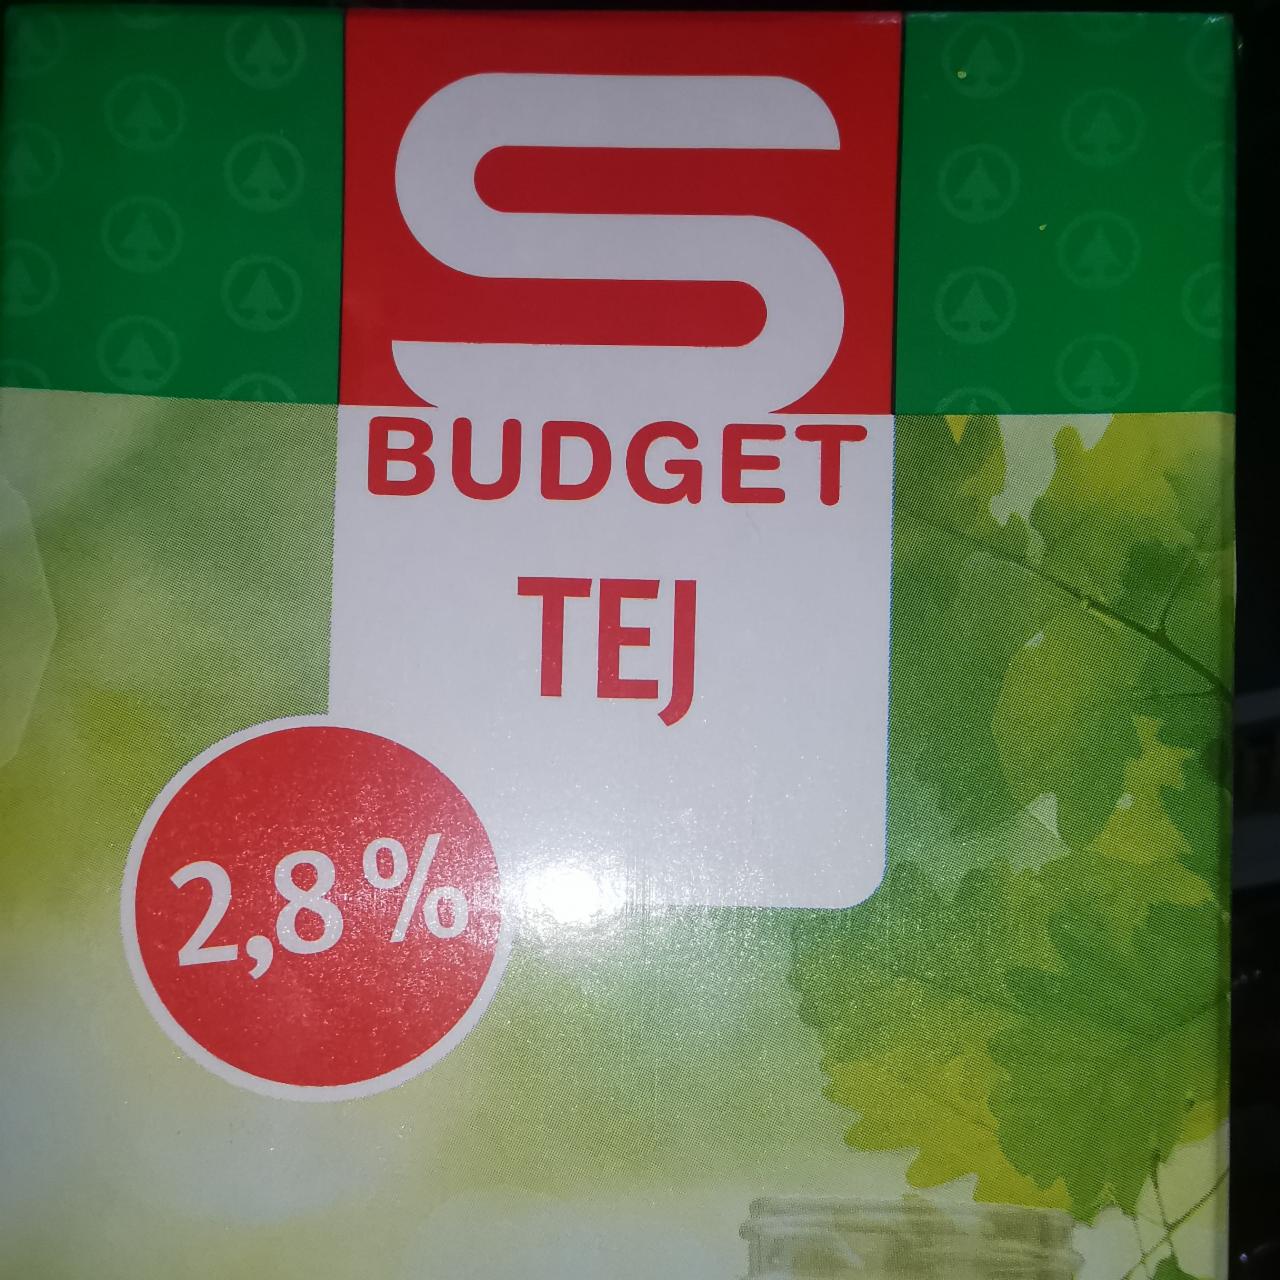 Képek - Tej UHT 2,8% S Budget